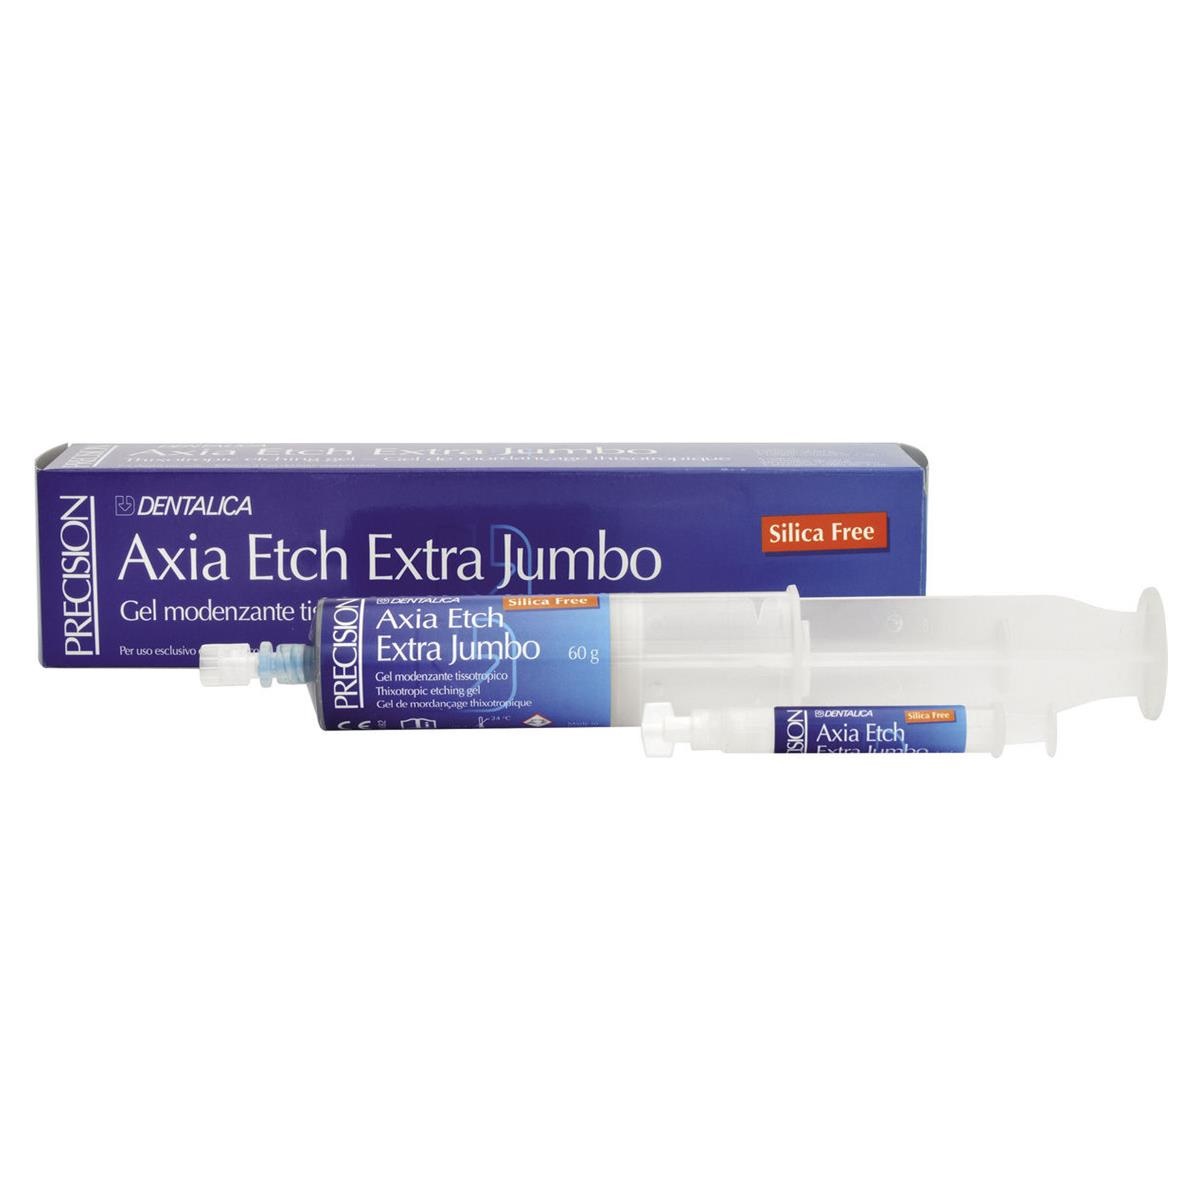 AXIA ETCH EXTRA JUMBO kit  60gr